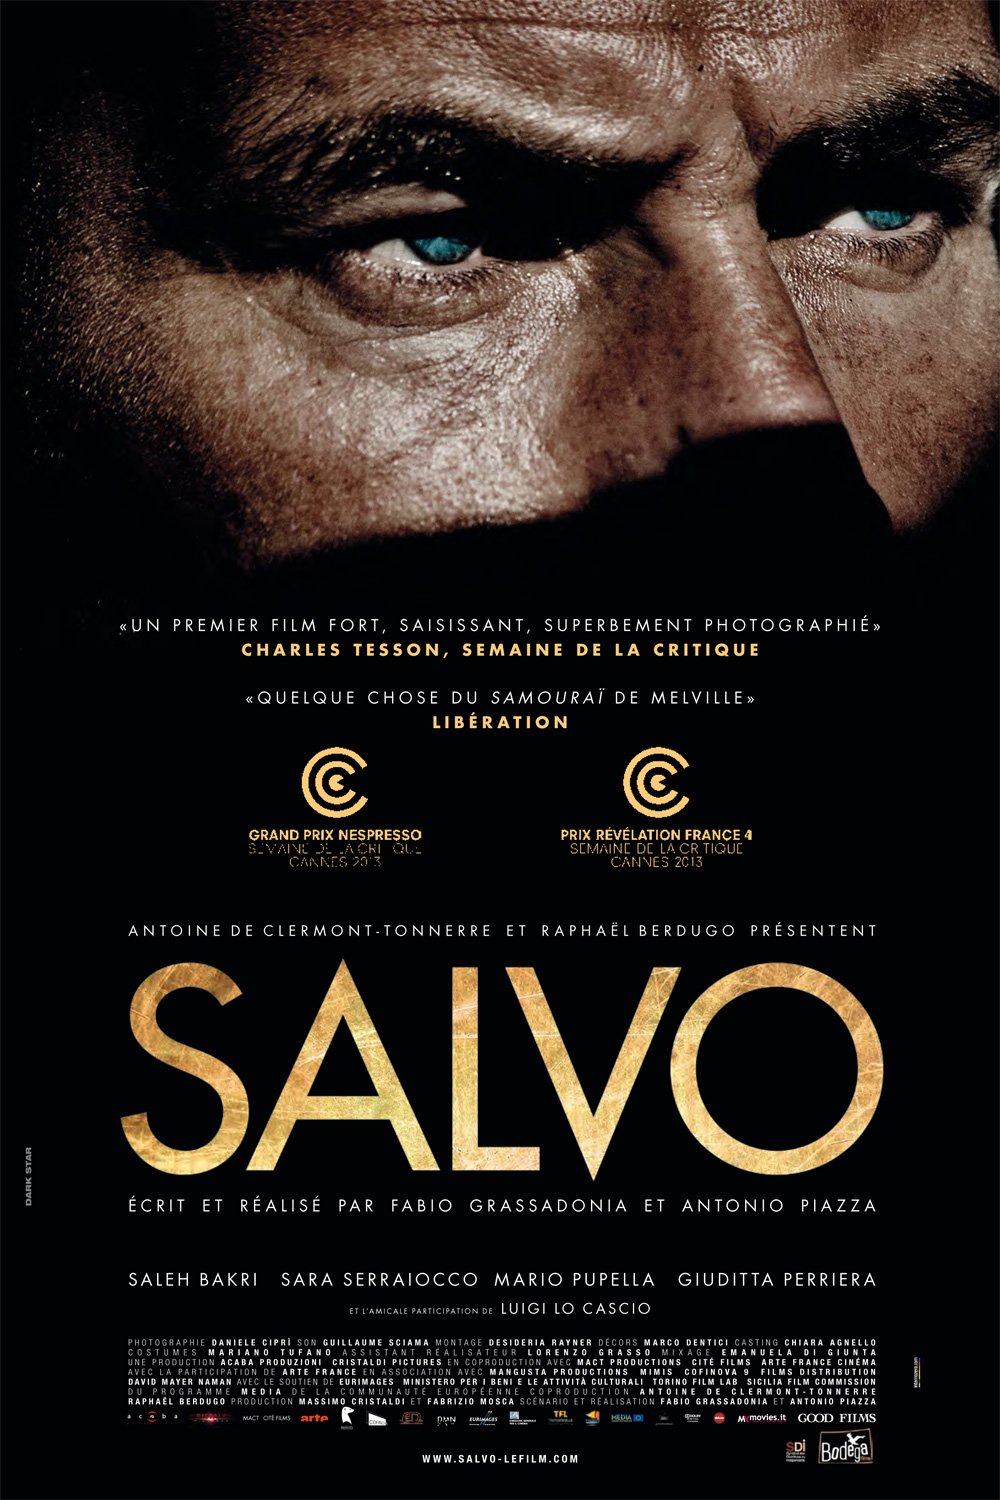 Italian poster of the movie Salvo